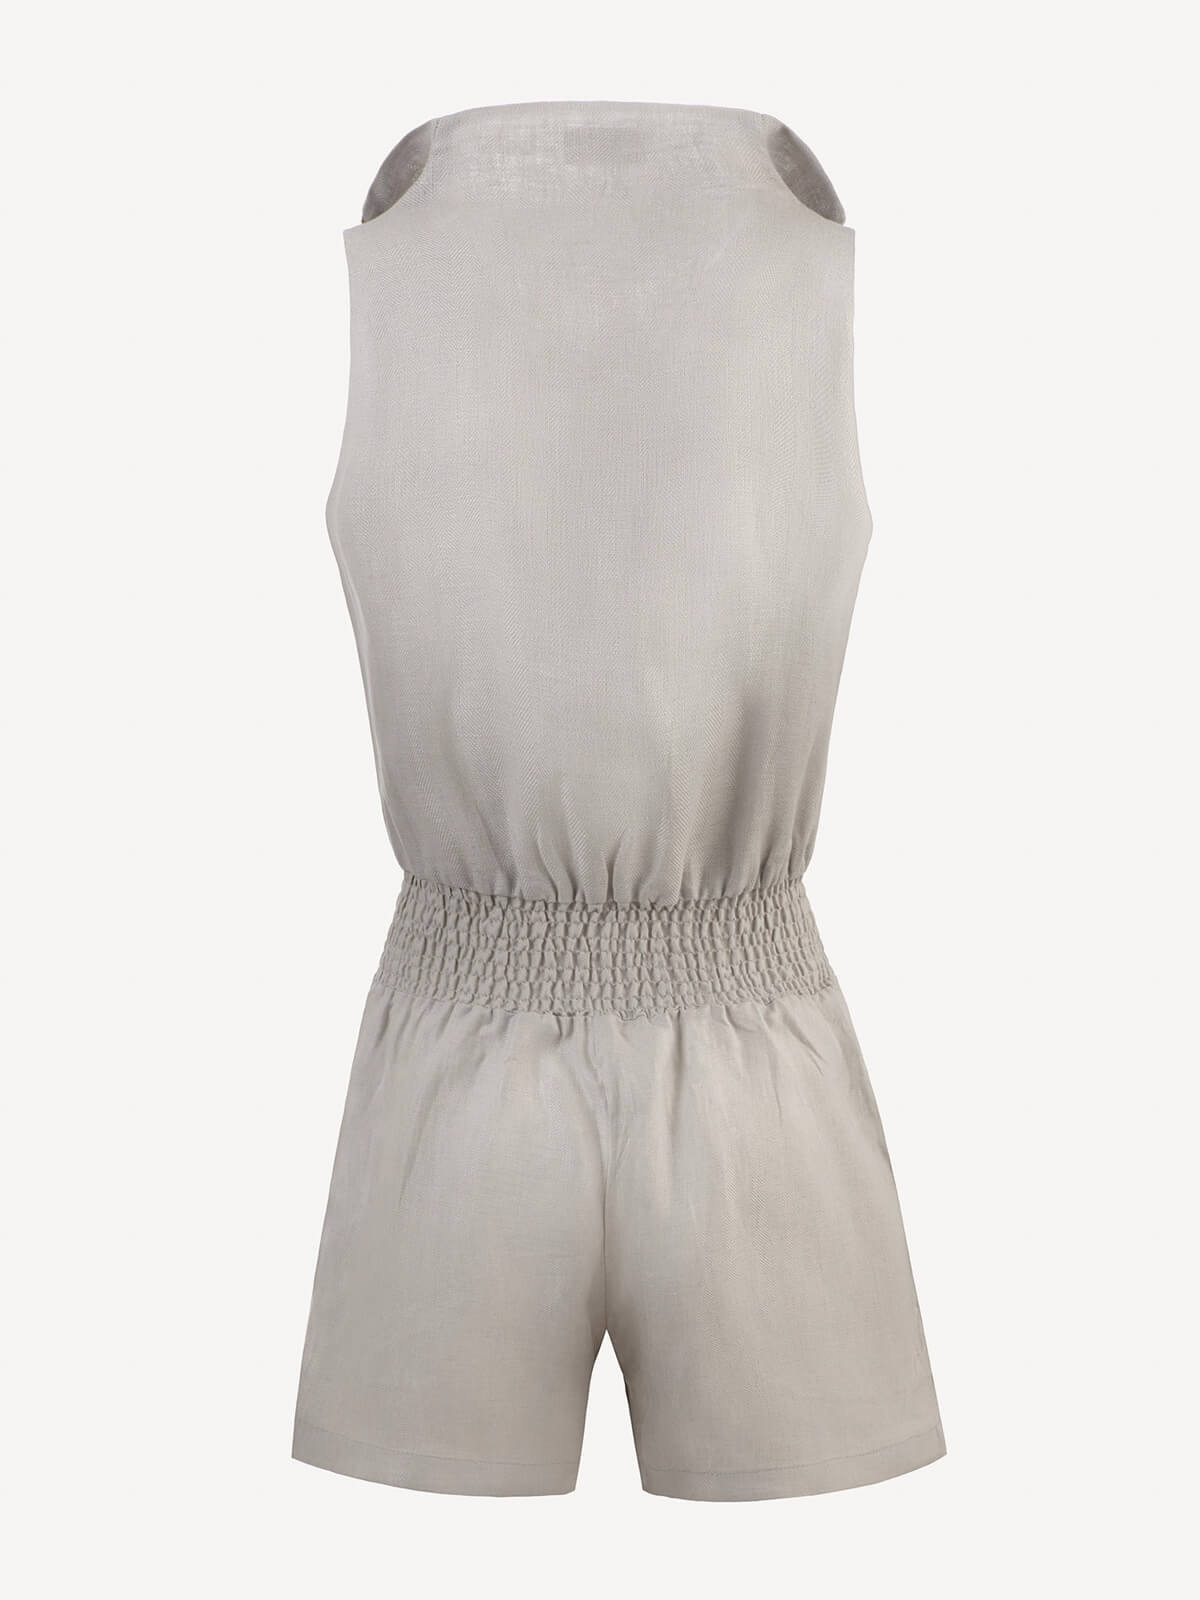 Jumpsuit Tuta Zip Woman Grey back 100% Capri